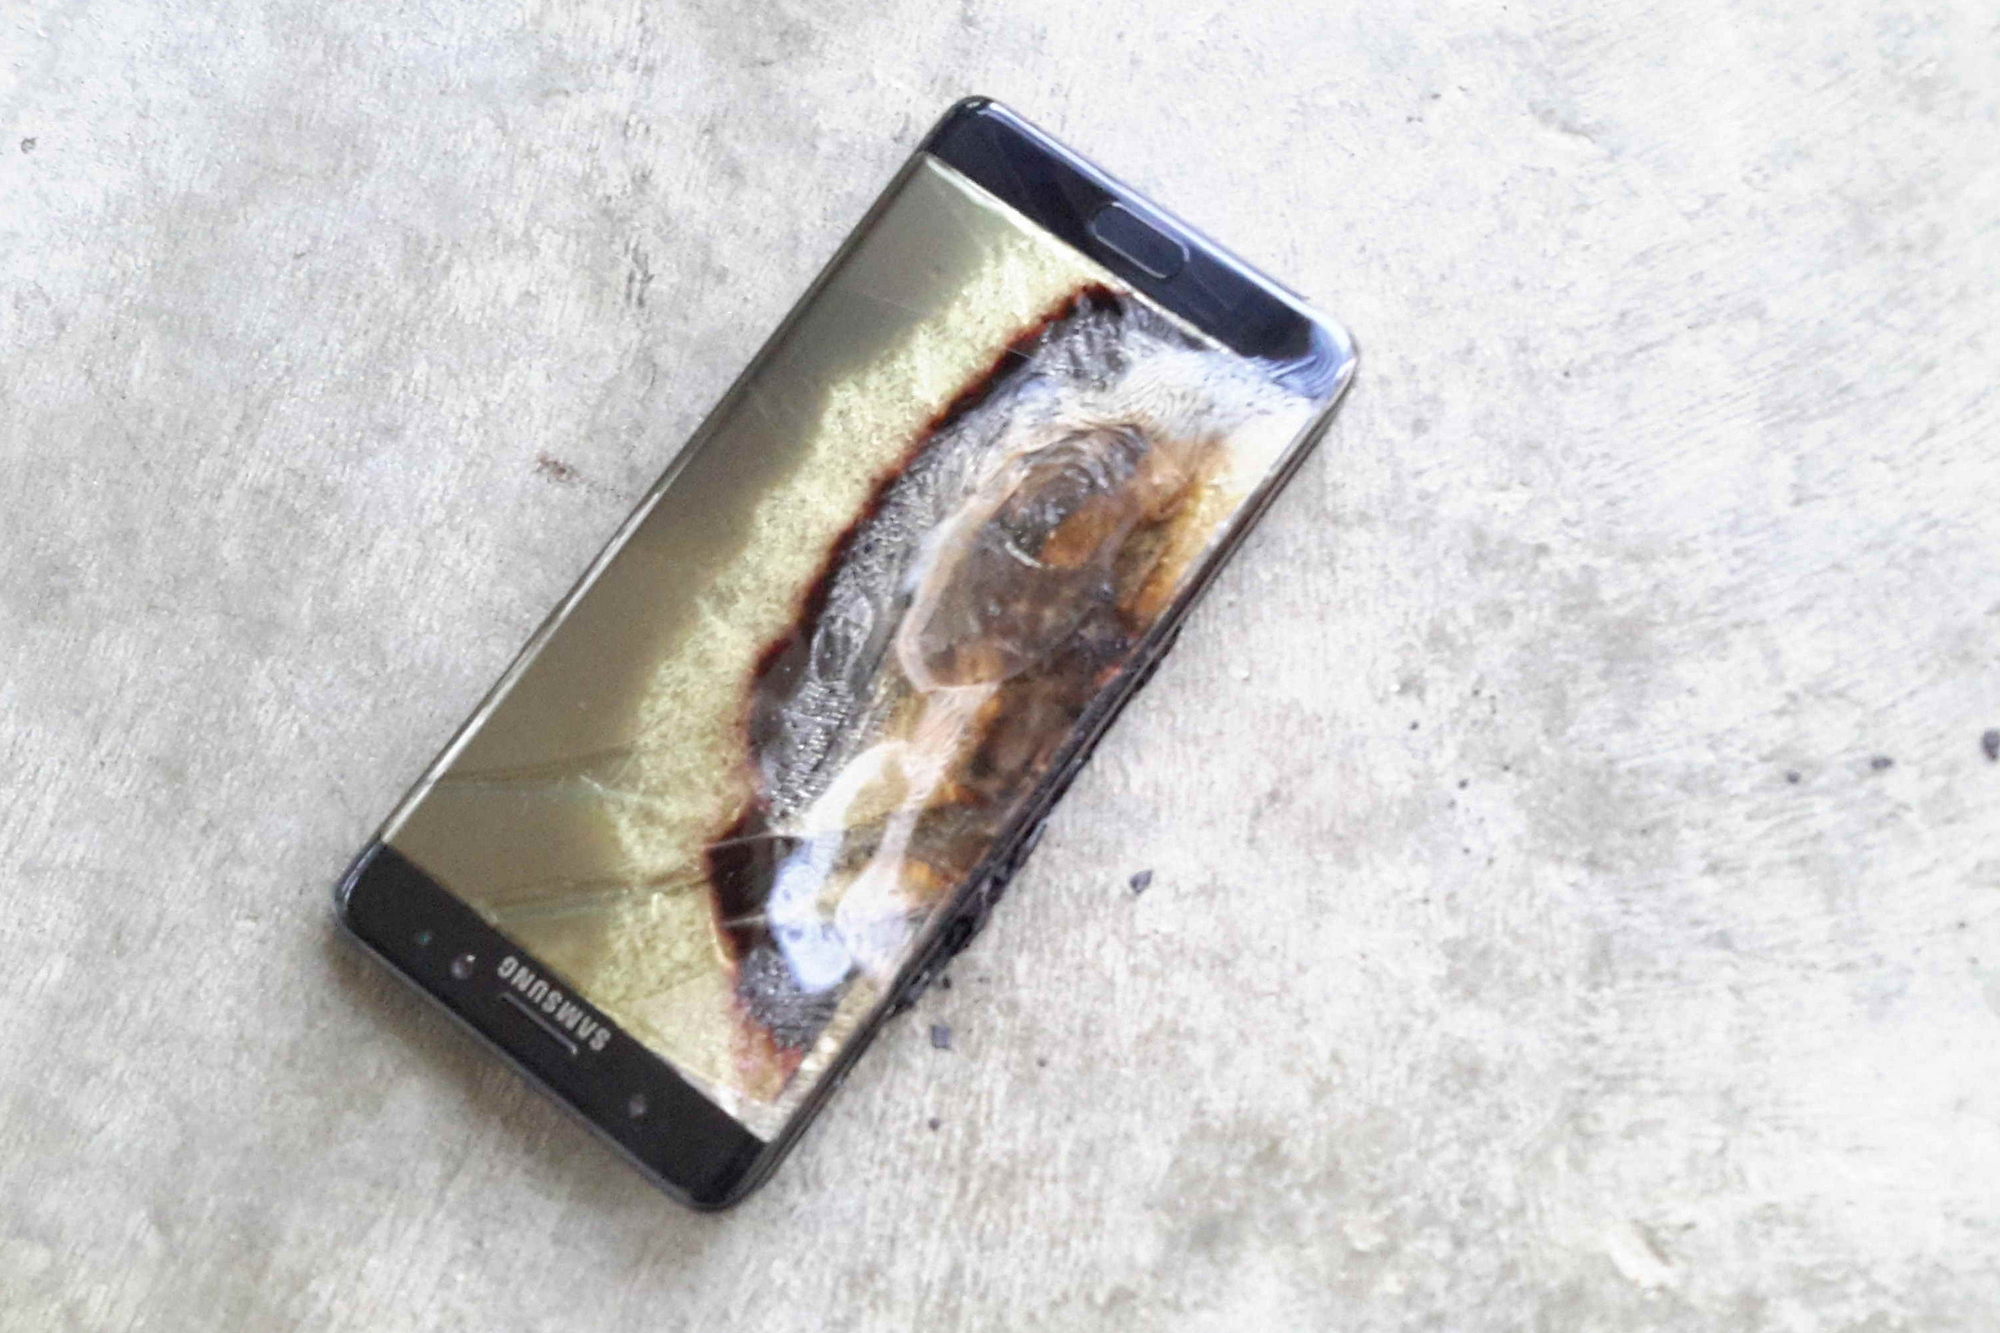  Sự cố Galaxy Note7 sẽ khiến Samsung tổn thất nặng nề. 